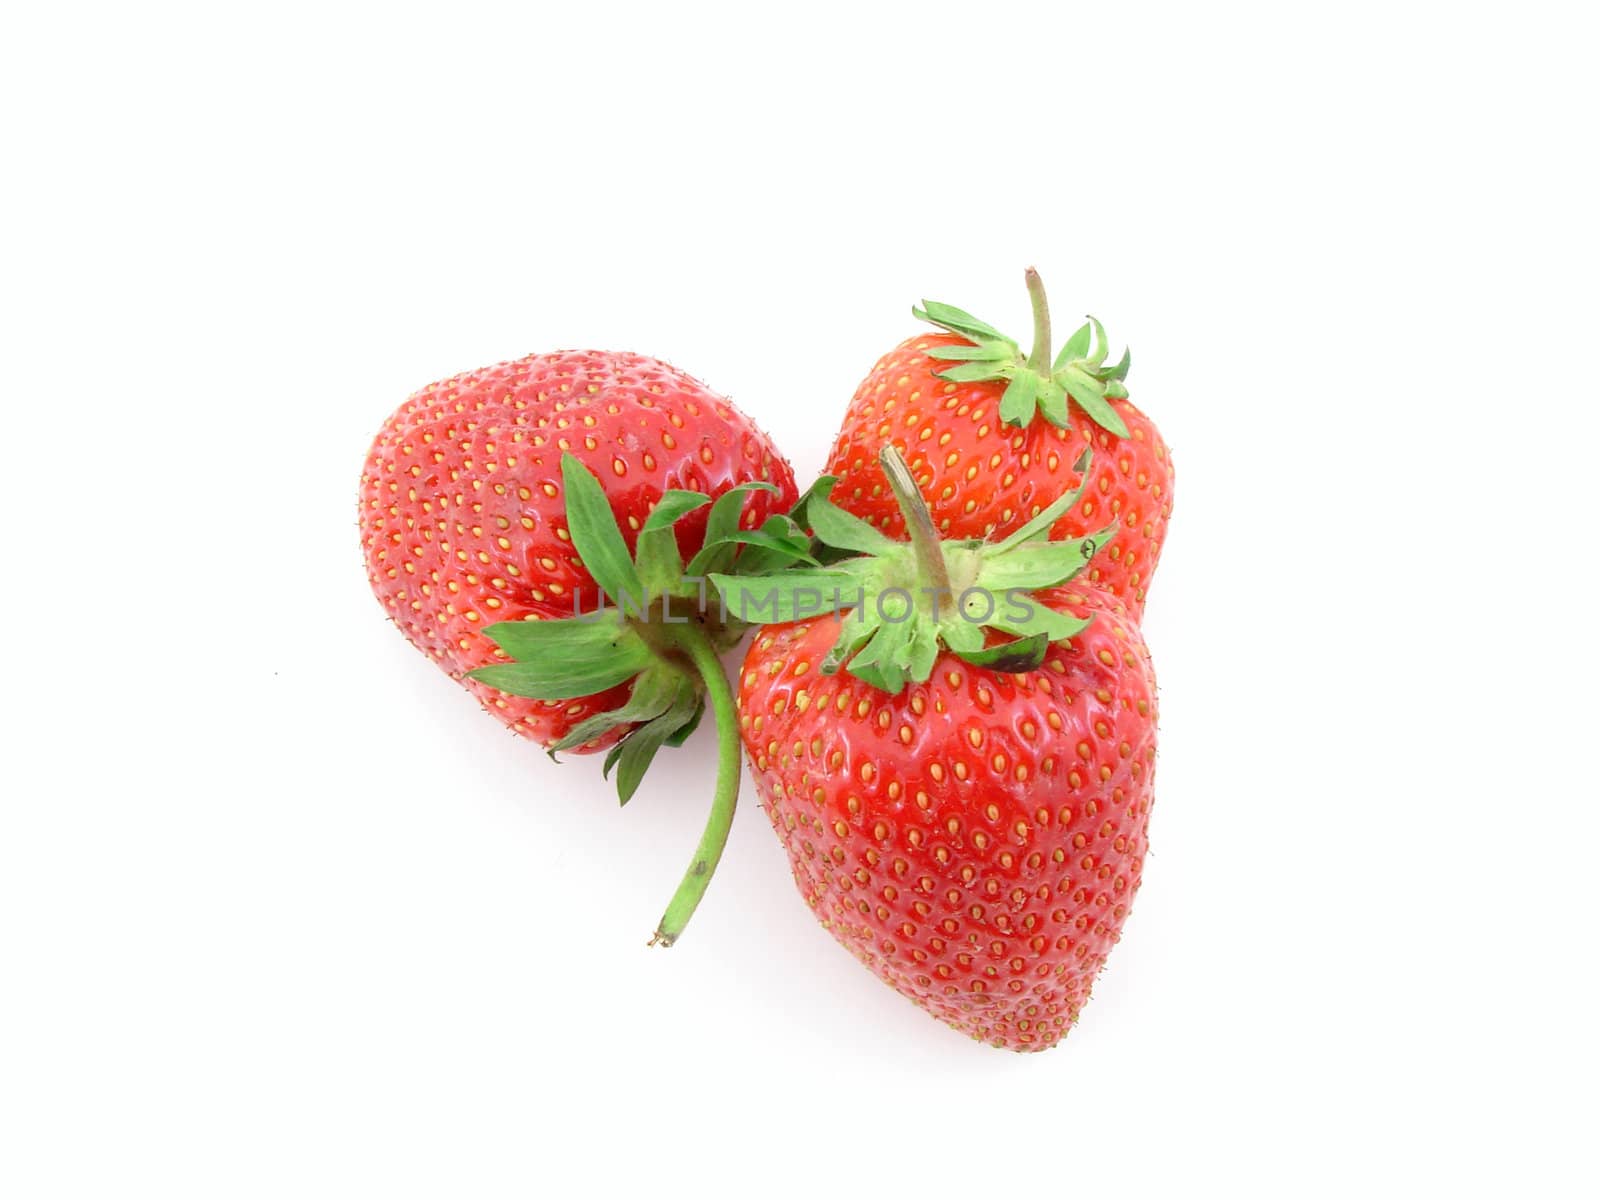 Strawberries by morchella